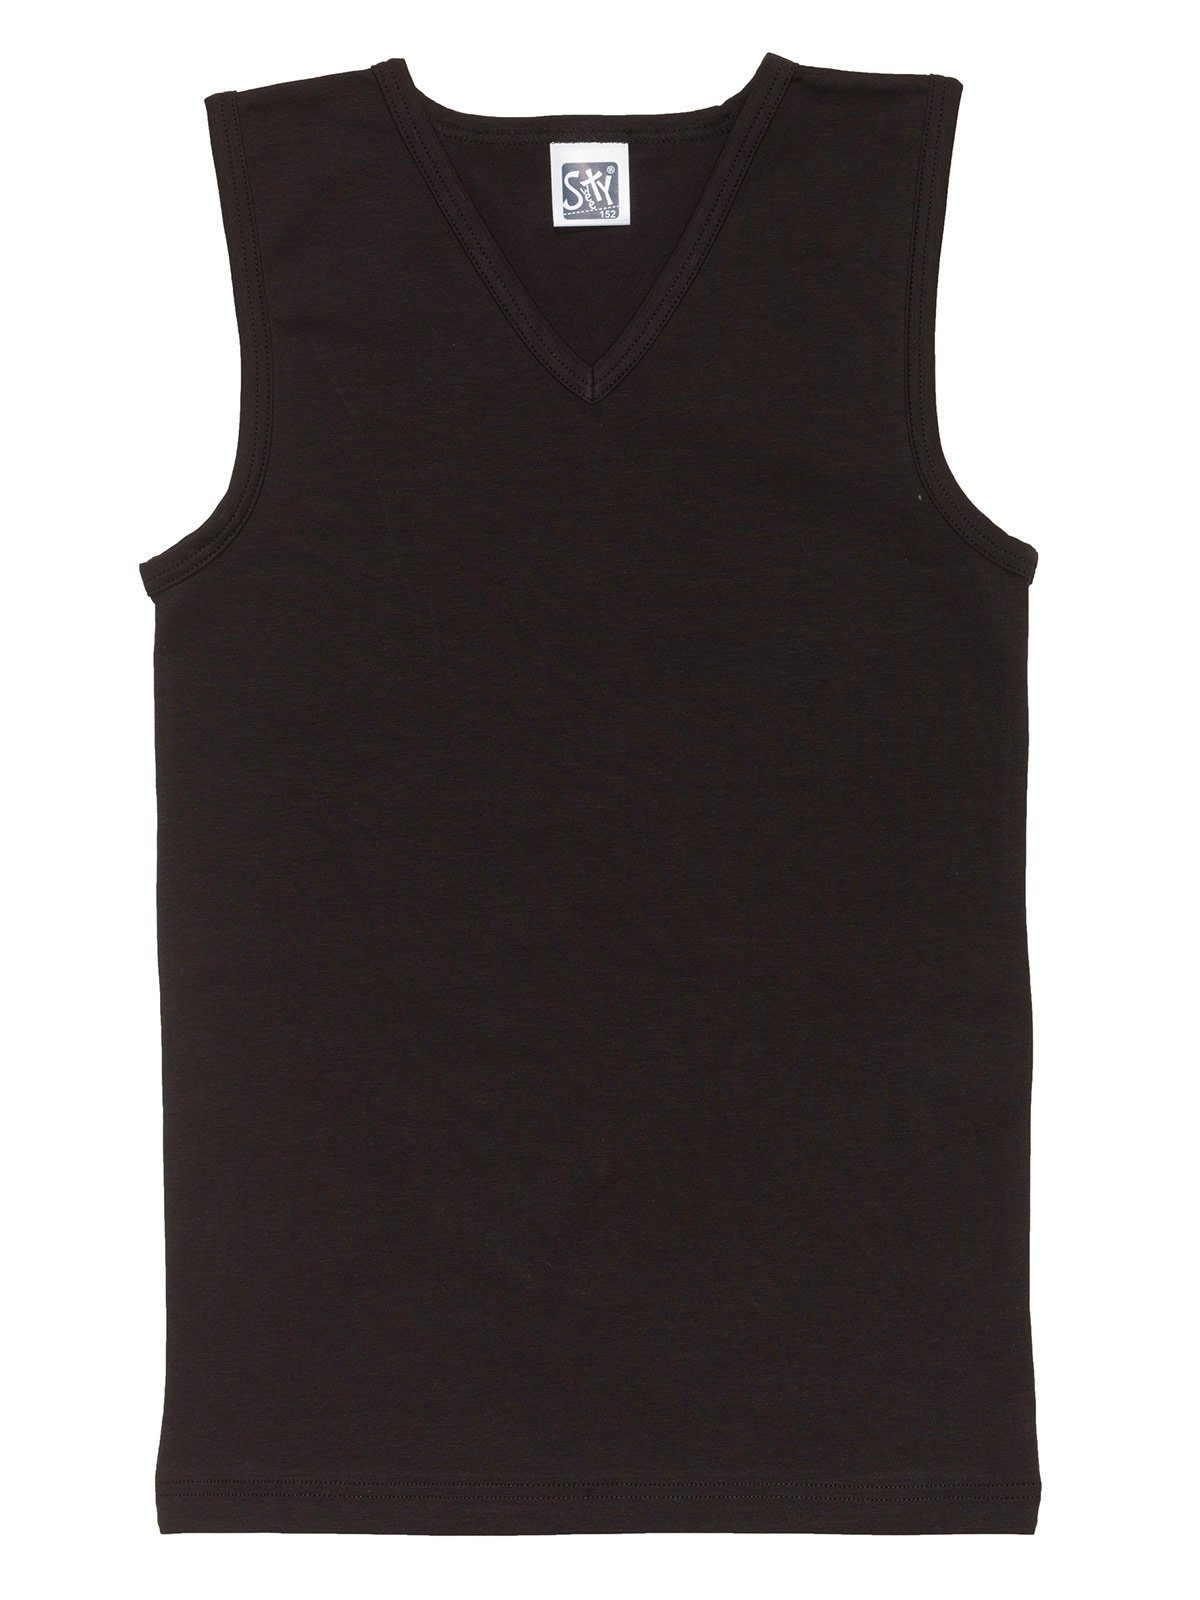 Single Sparpack Unterhemd Jersey 6-St) City hohe 6er for Sweety Knaben Markenqualität (Spar-Set, Shirt Kids schwarz